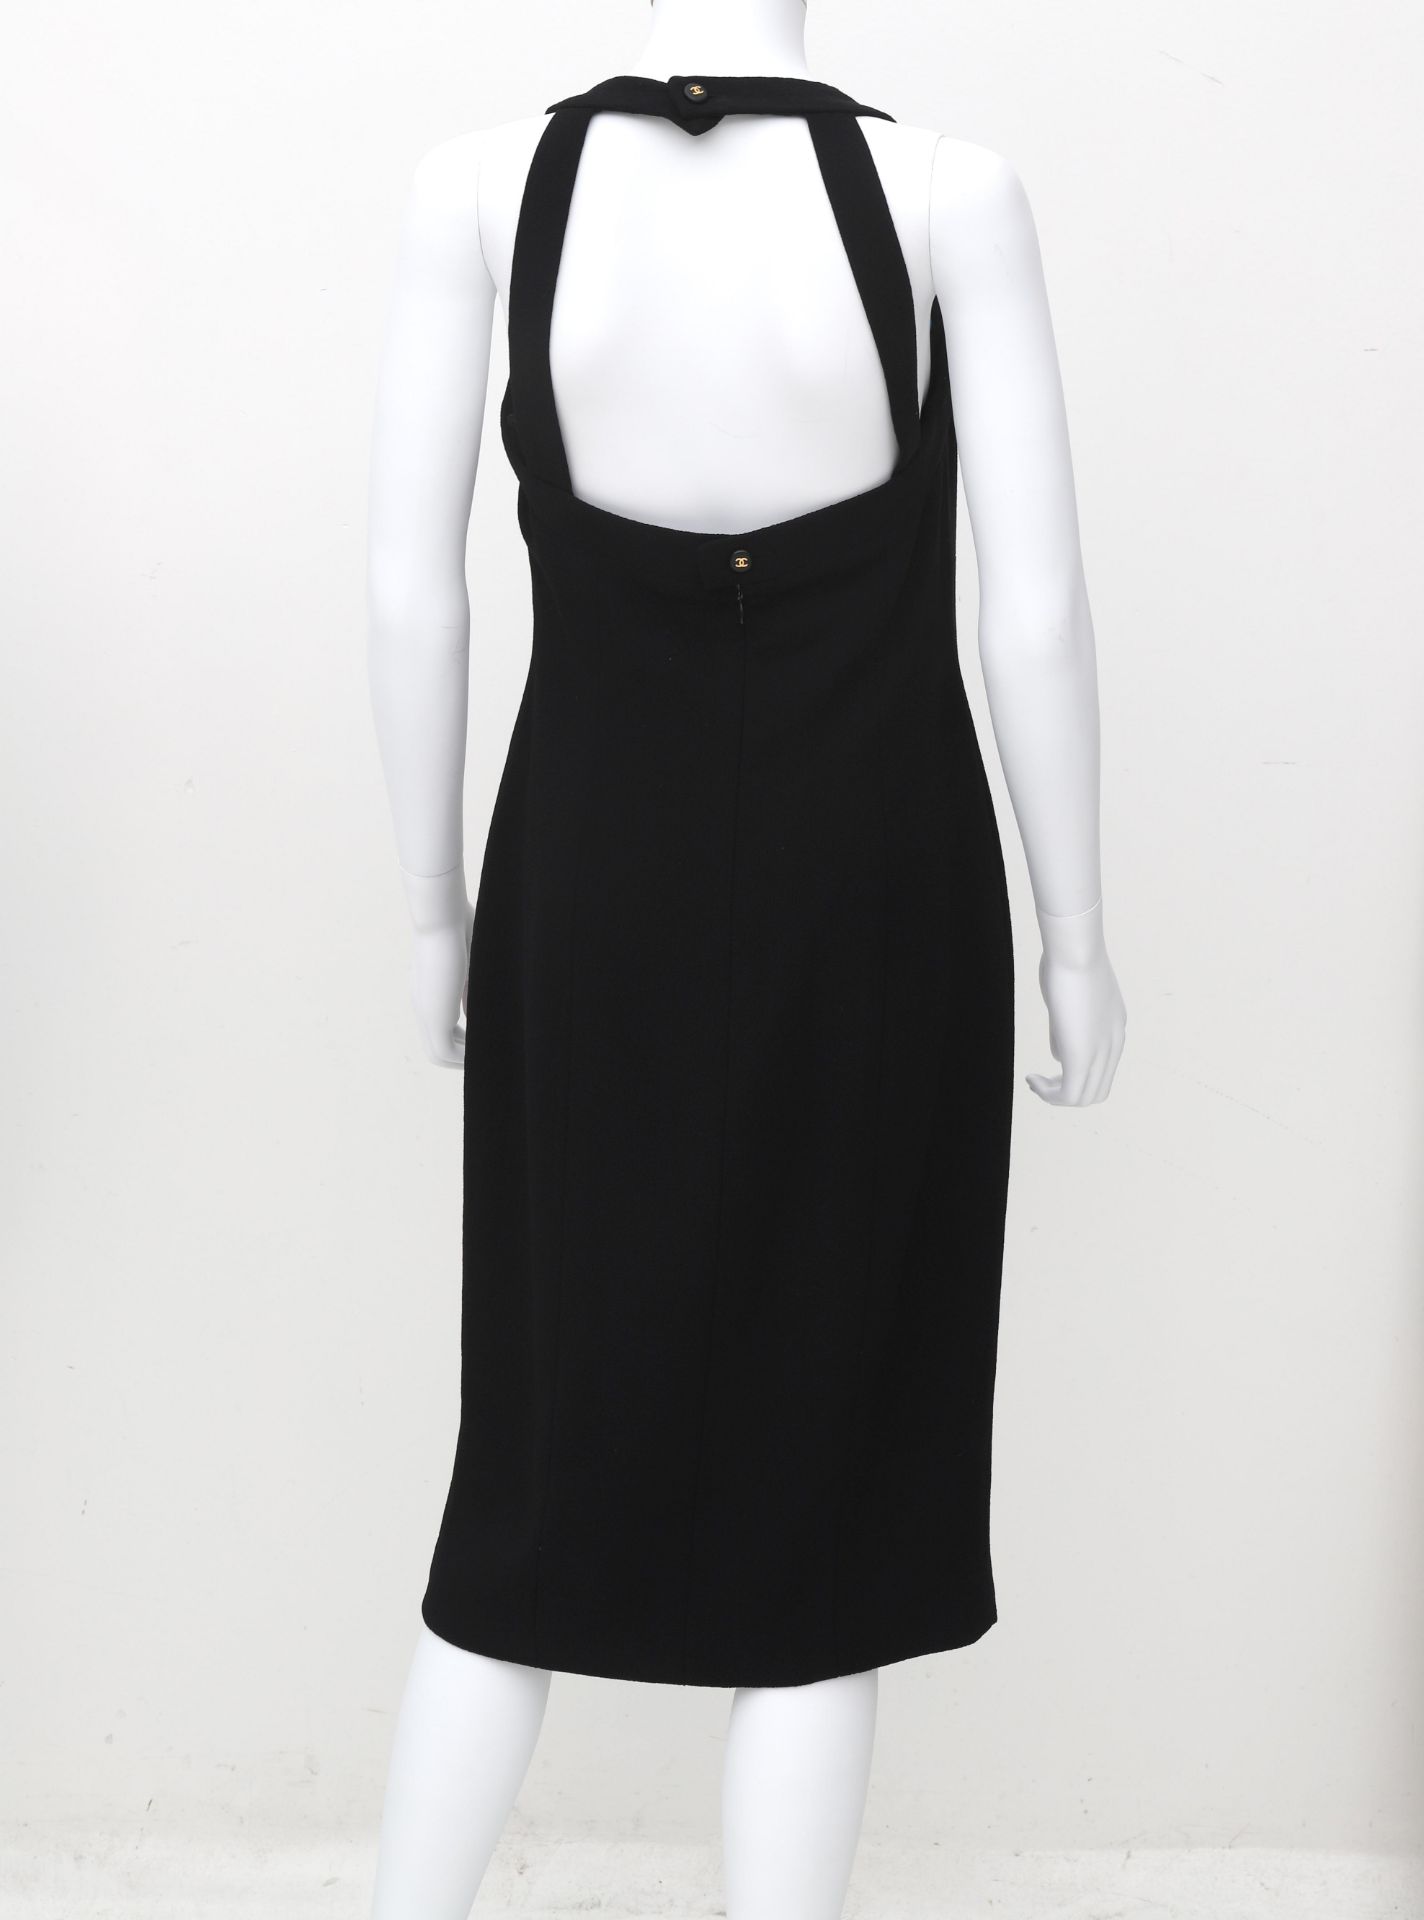 A Chanel Boutique, black bodycon dress with wide shoulder straps. Fabric: 95% silk, 5% lycra Size: - Bild 4 aus 6